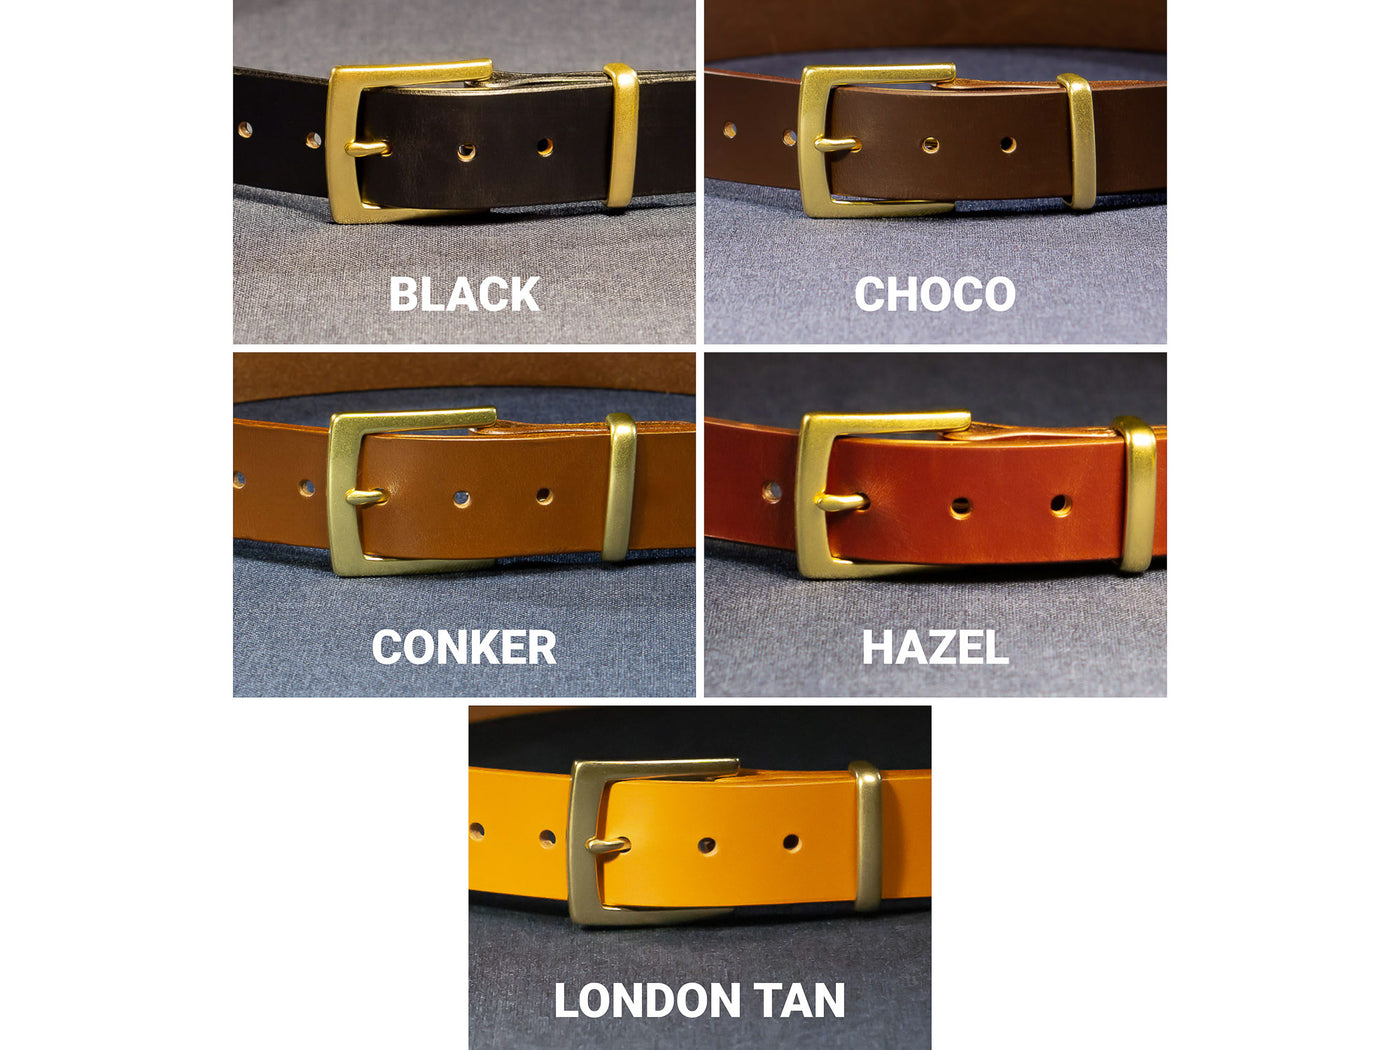 Leather Belt Opus ~ Black Sedgwick Belt with Heel-bar Buckle - Atlas Leathercraft - Handmade Australian Leather Goods